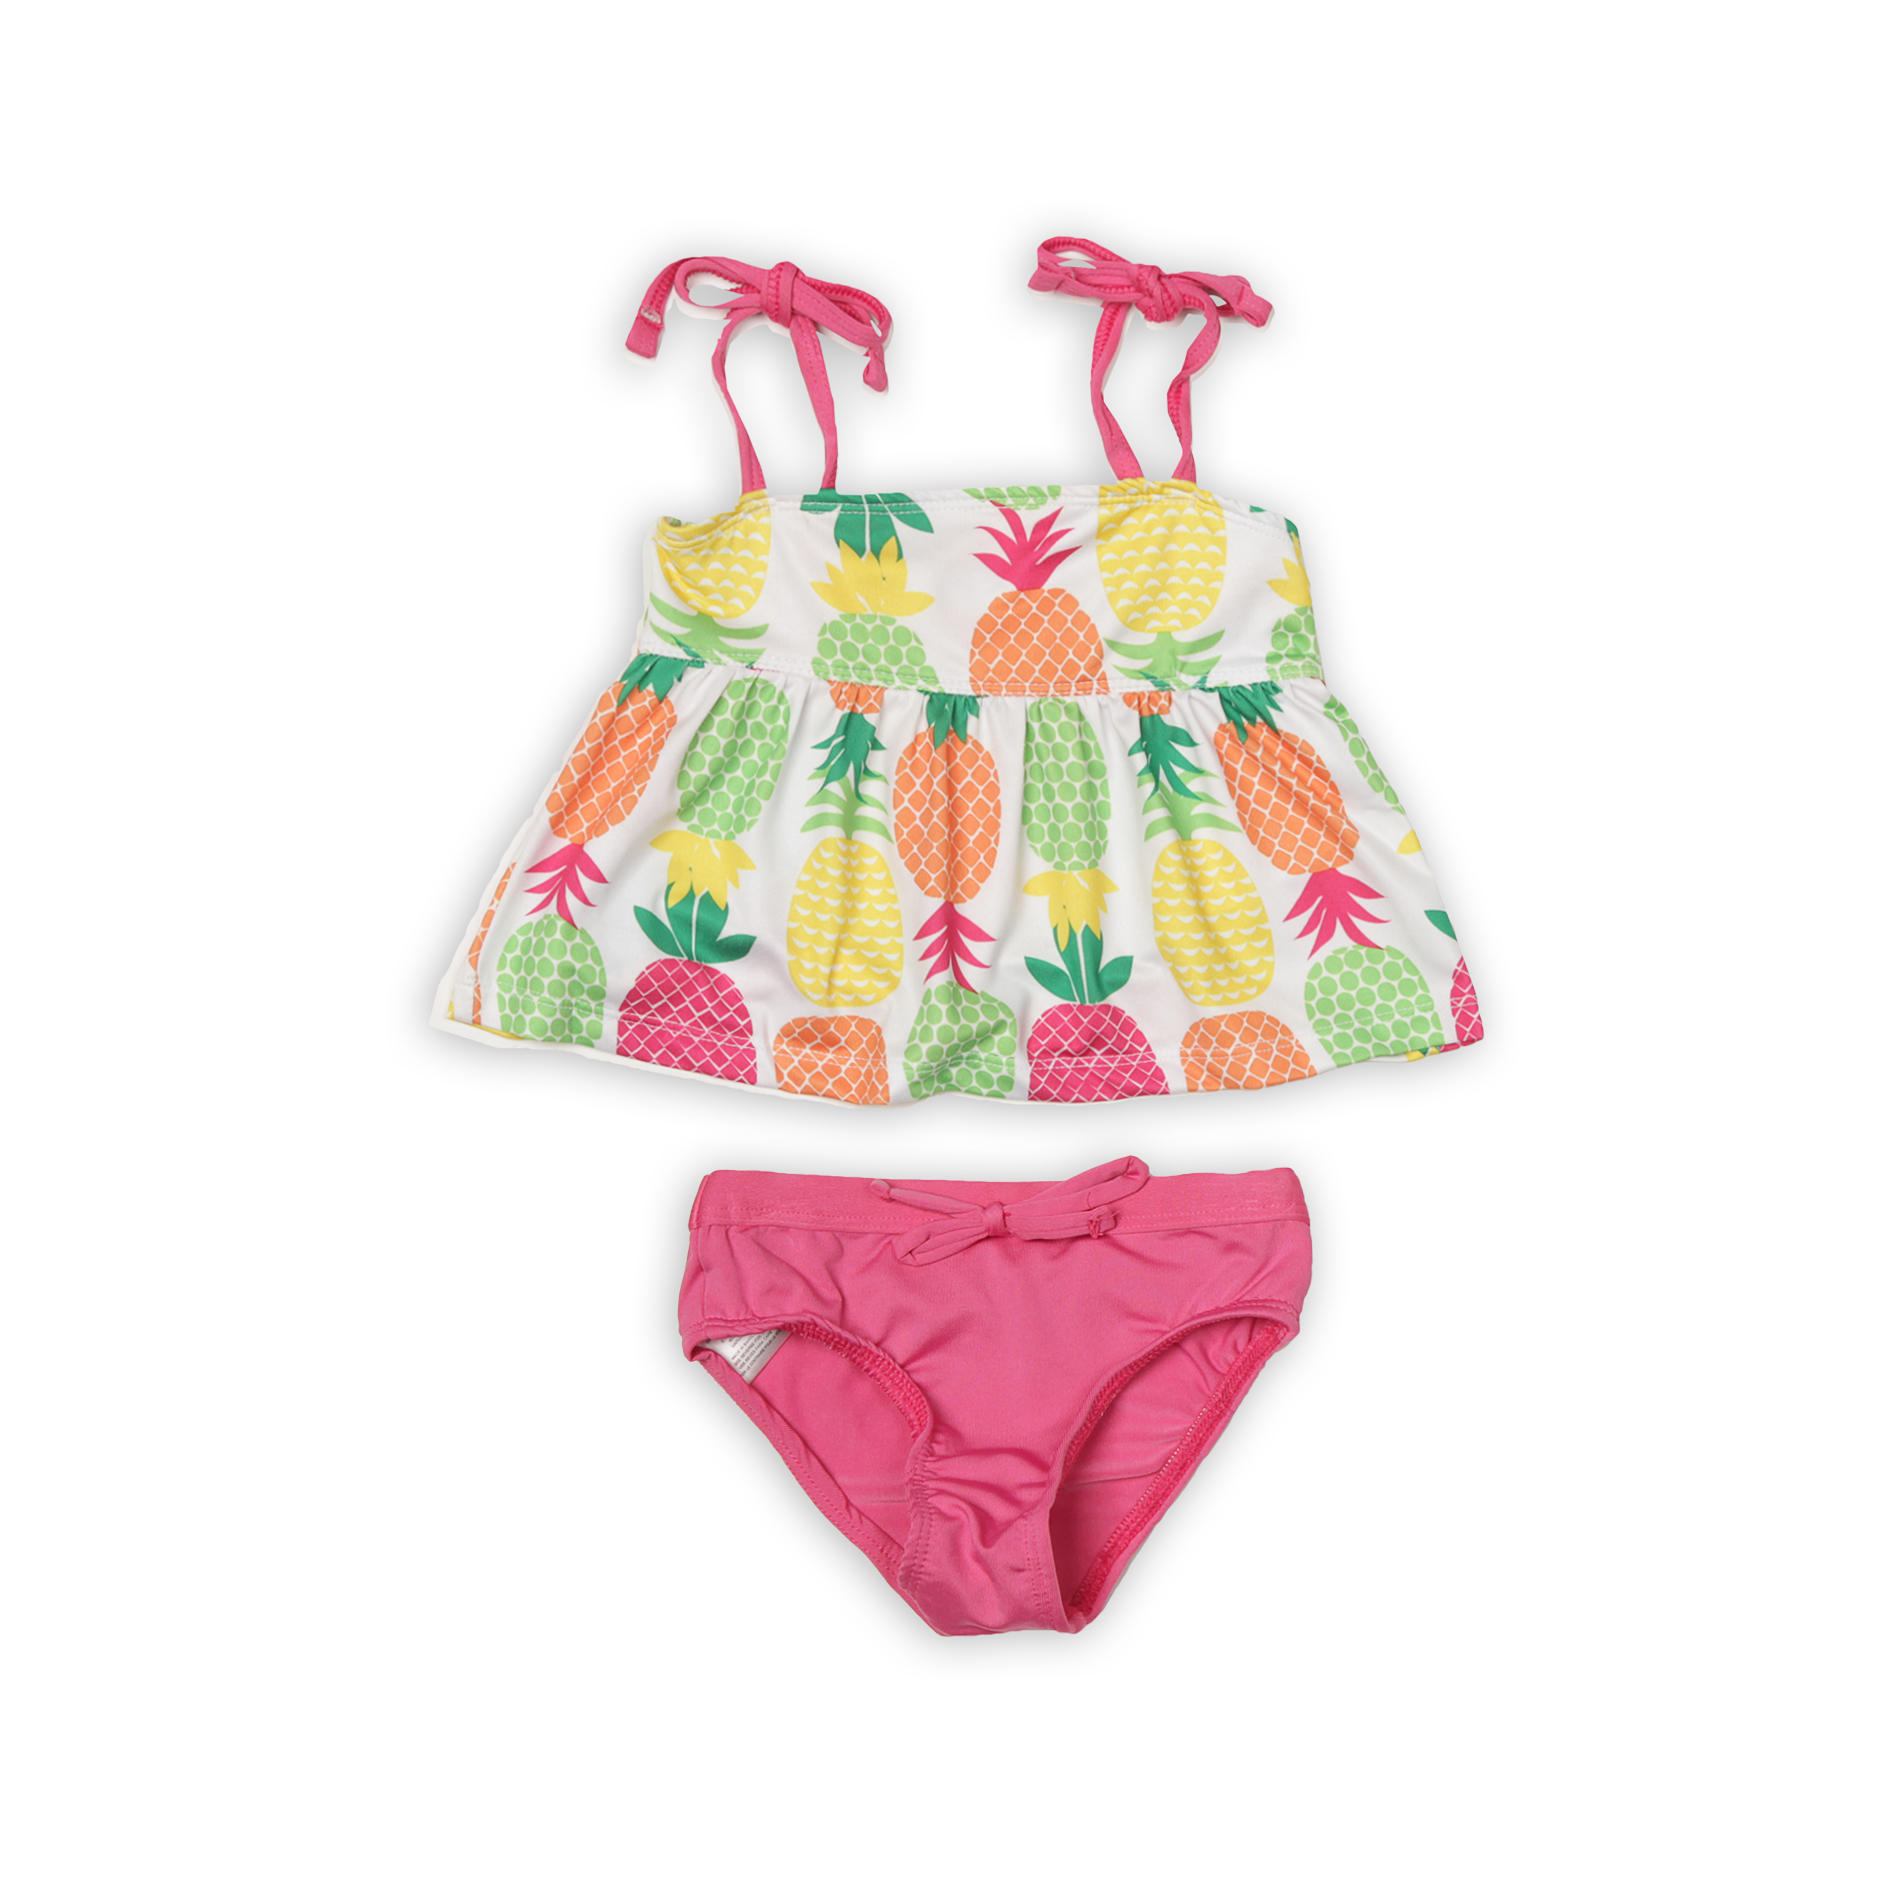 Pink Platinum Infant & Toddler Girl's Tankini Top & Bottoms - Pineapples